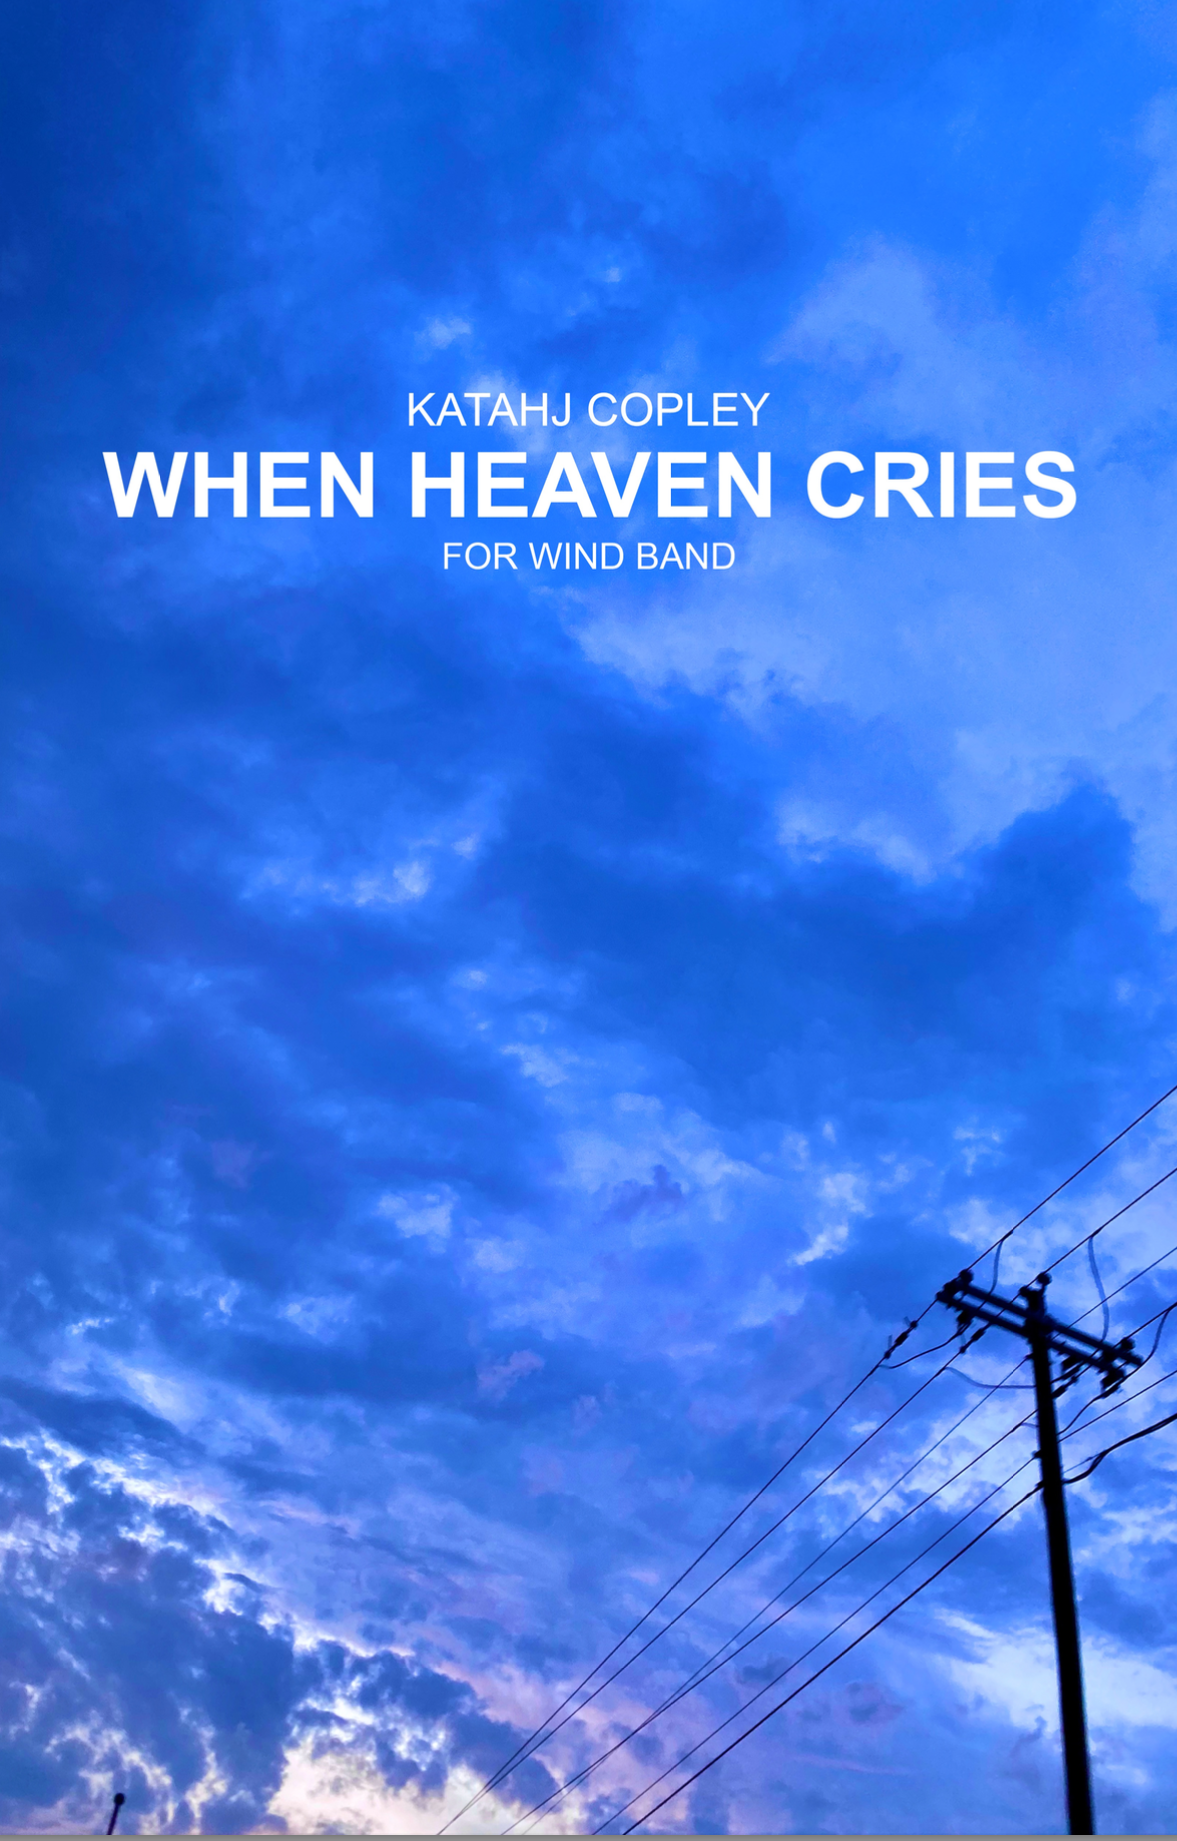 When Heaven Cries (Score Only) by Katahj Copley